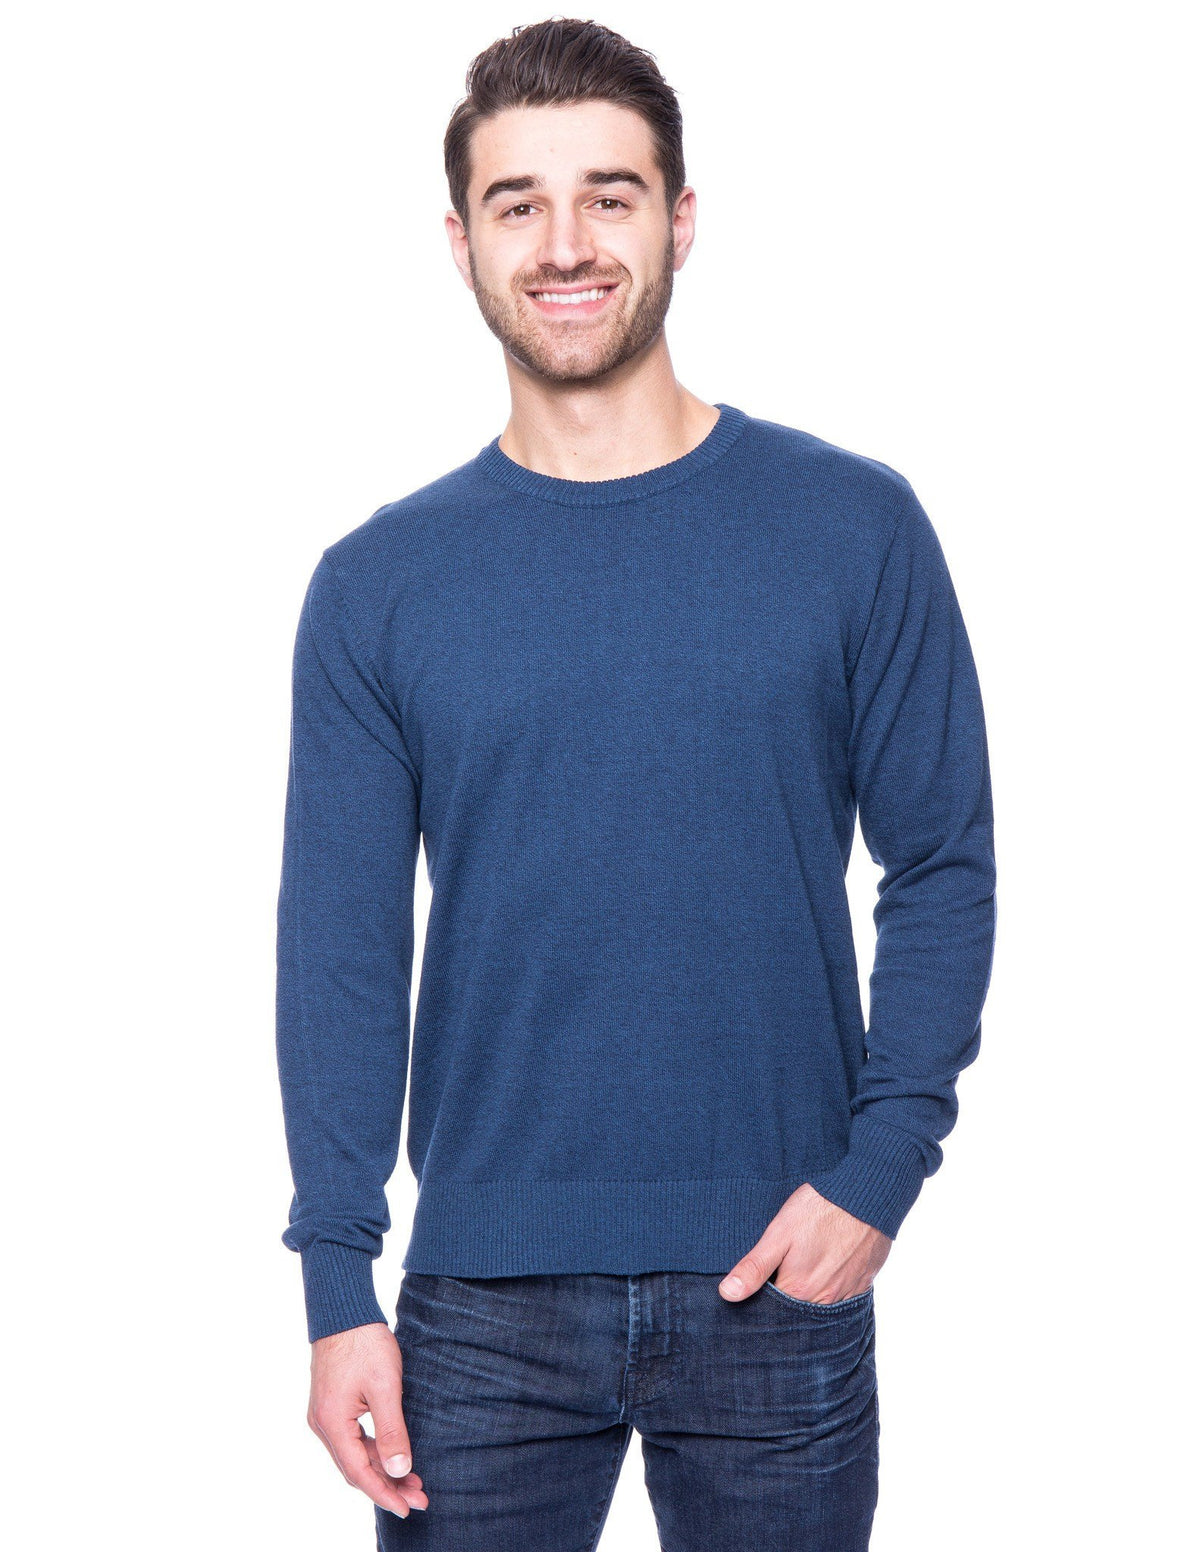 Men's 100% Cotton Crew Neck Sweater - Marl Navy/Teal